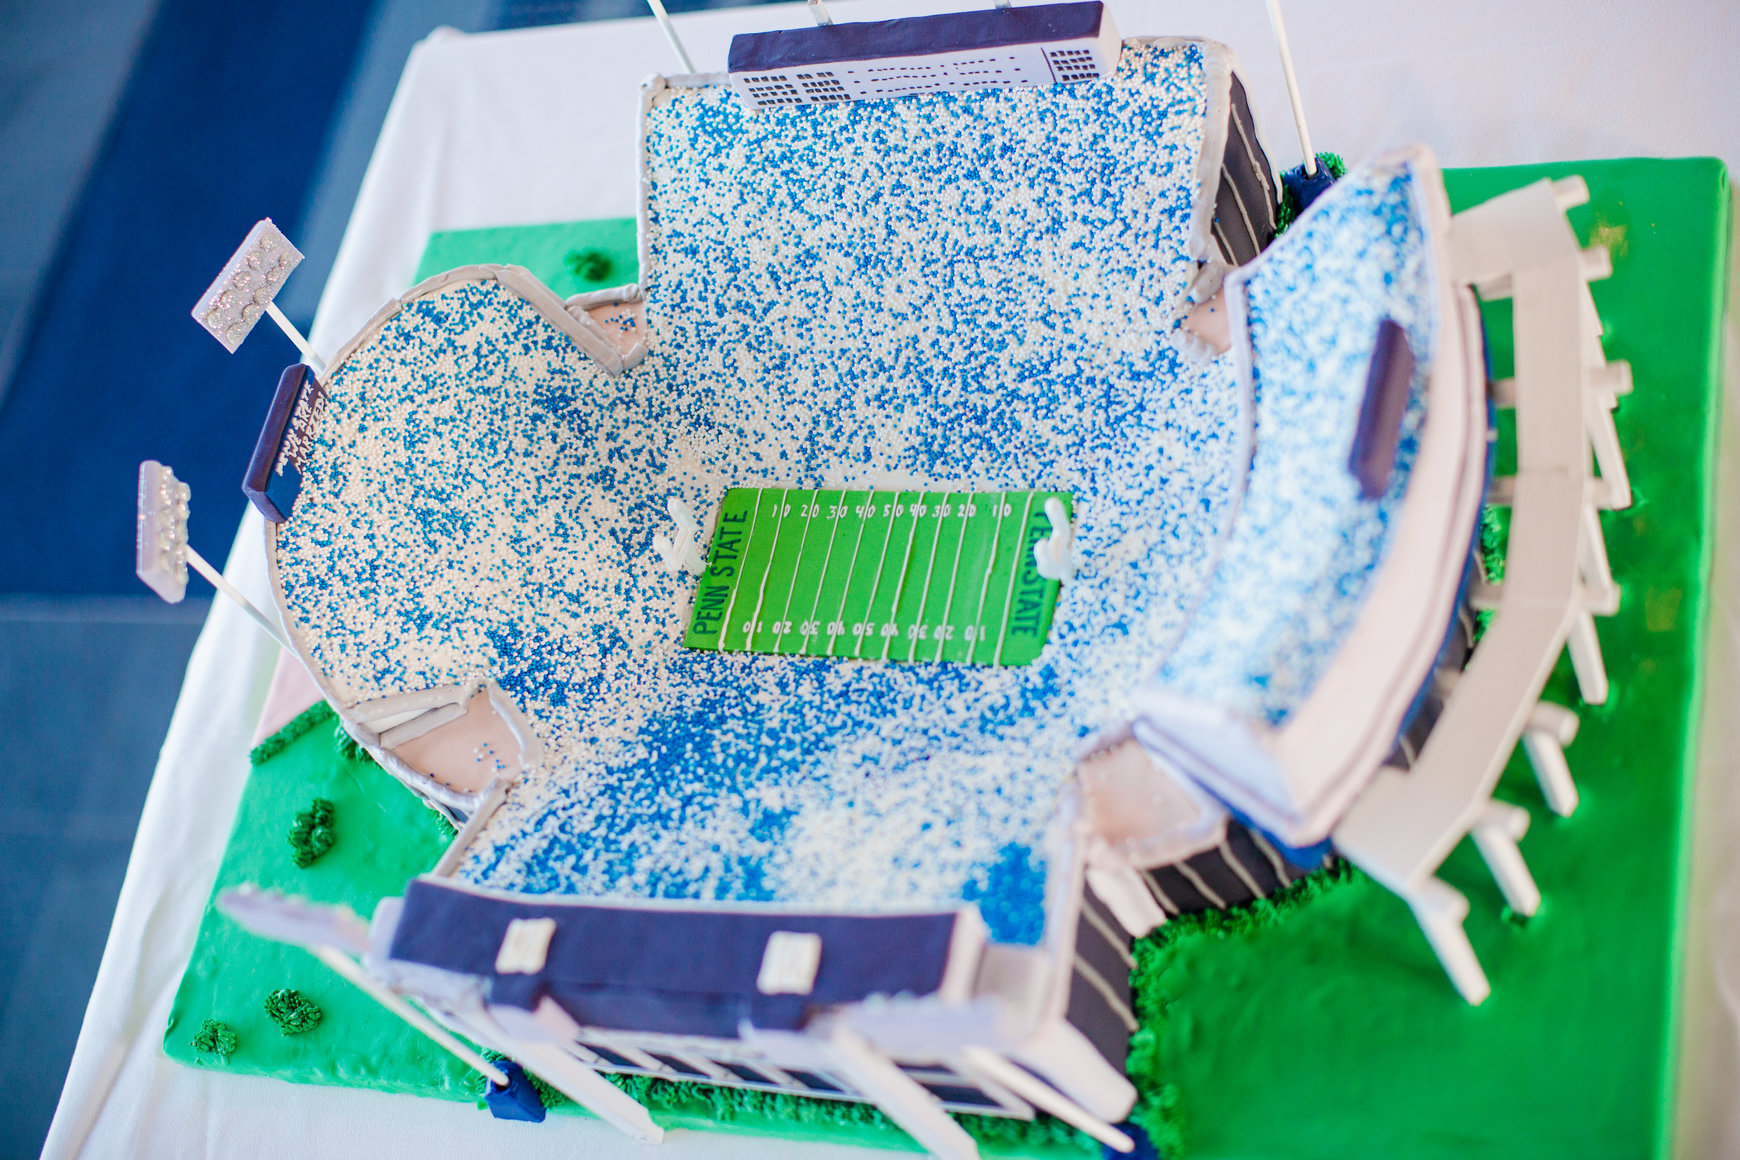 Beaver Stadium Replica Groom's Cake Makes Social Media Rounds Onward State